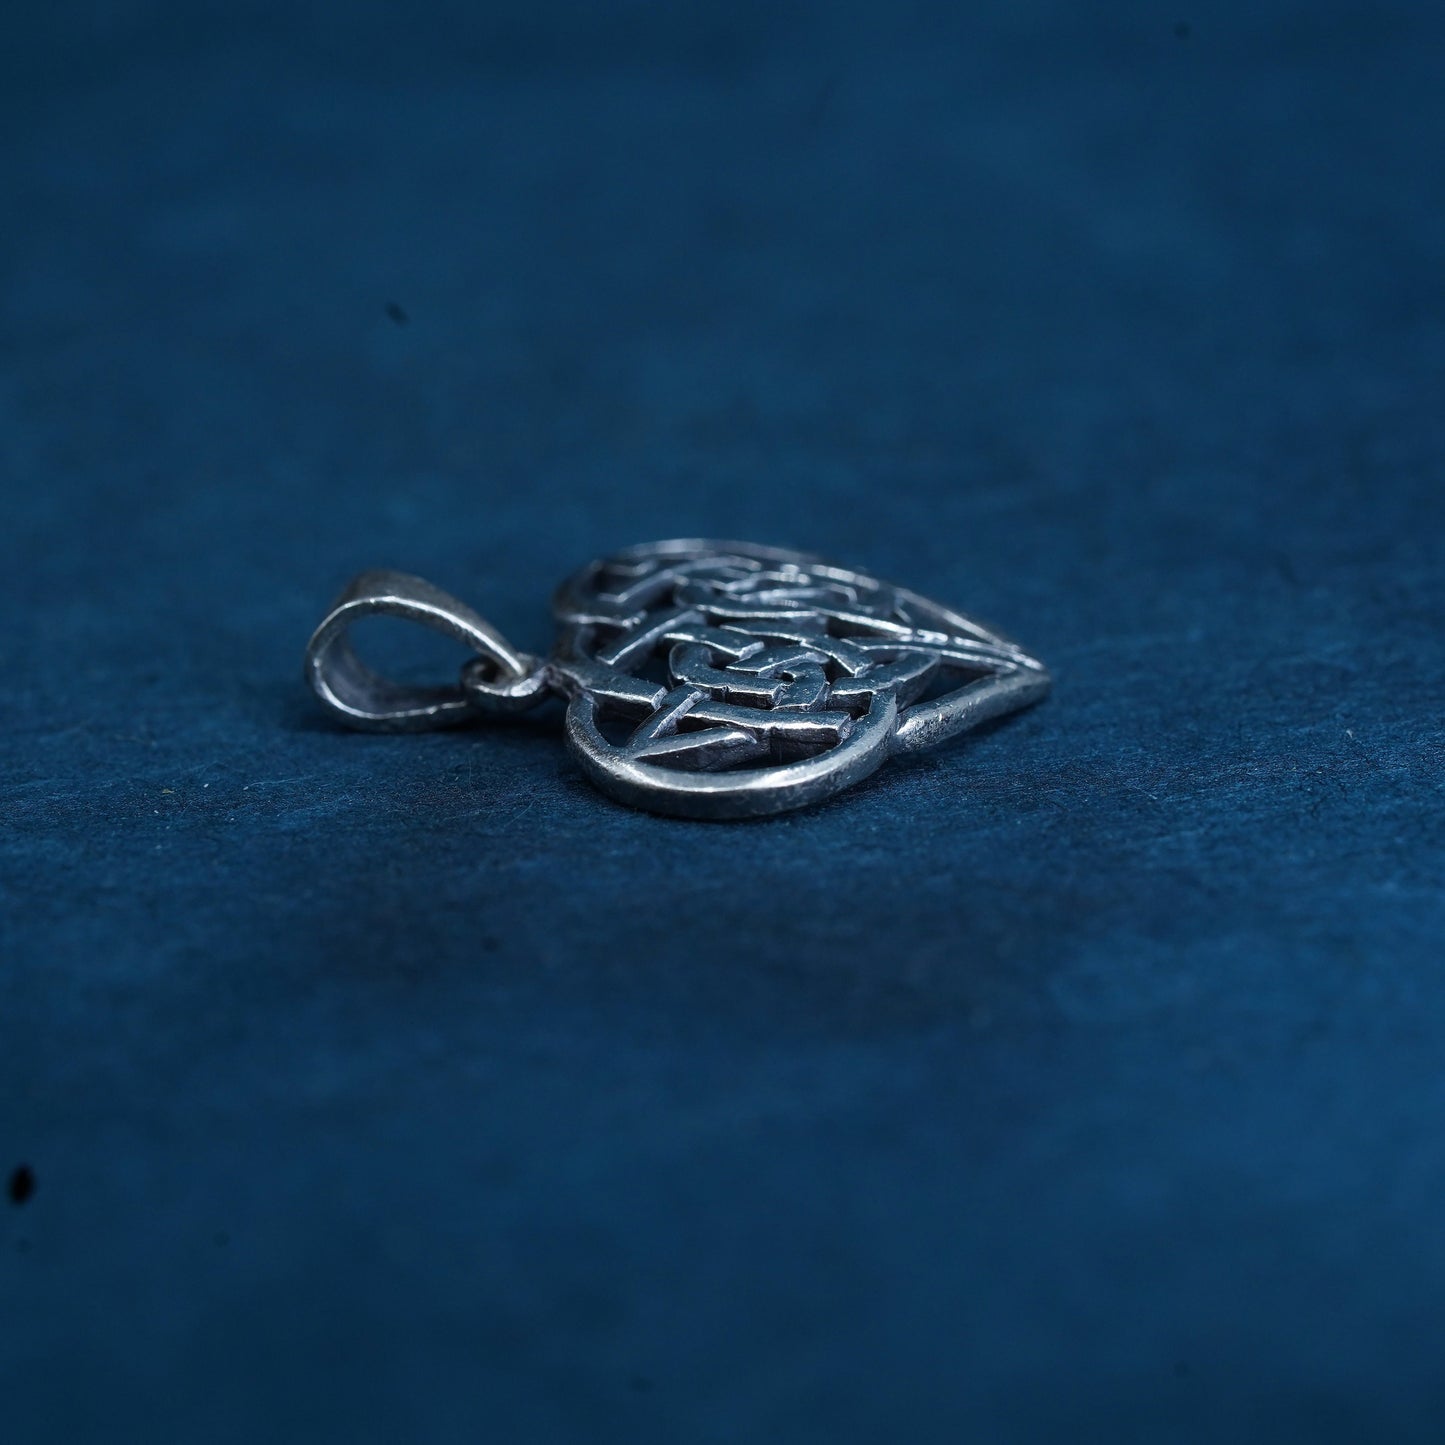 Irish Sterling silver handmade pendant, 925 Celtic knot heart charm